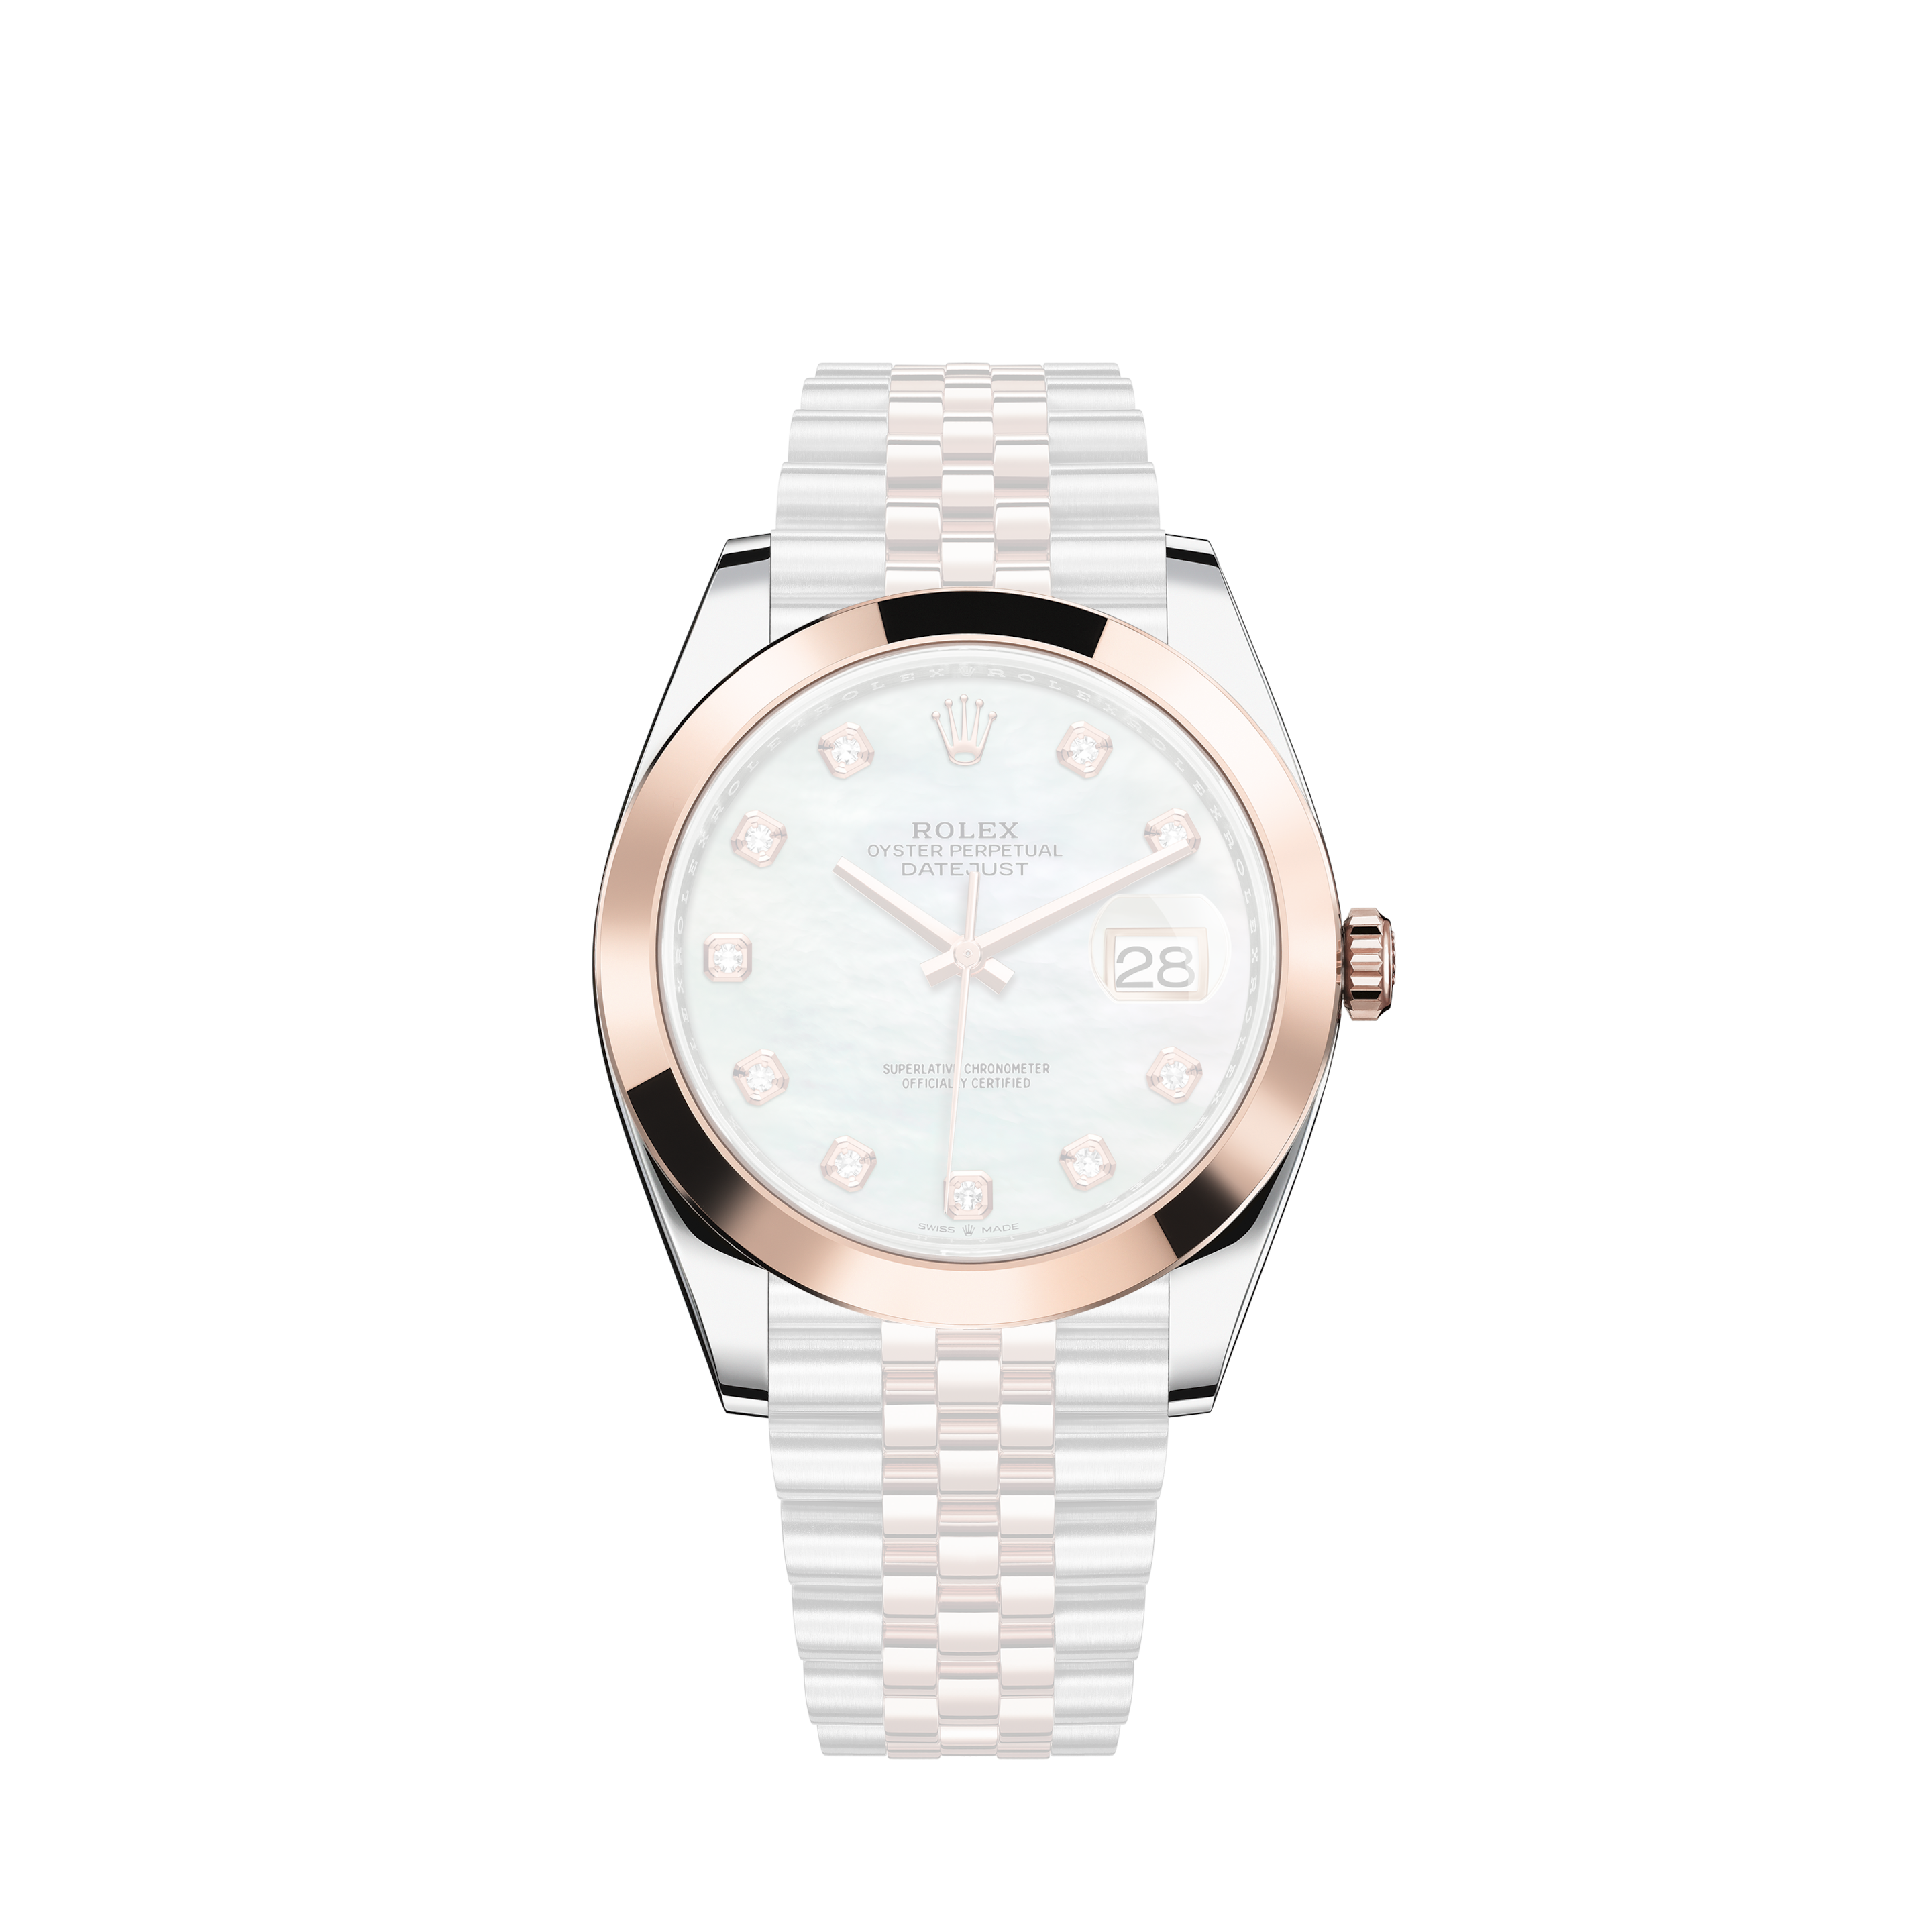 Rolex Datejust 36mm 4.5Ct Diamond Bezel/Bracelet/Linen White Dial 116200 WatchRolex Datejust 36mm 4.5Ct Diamond Bezel/Bracelet/Maroon Vignette Dial Watch